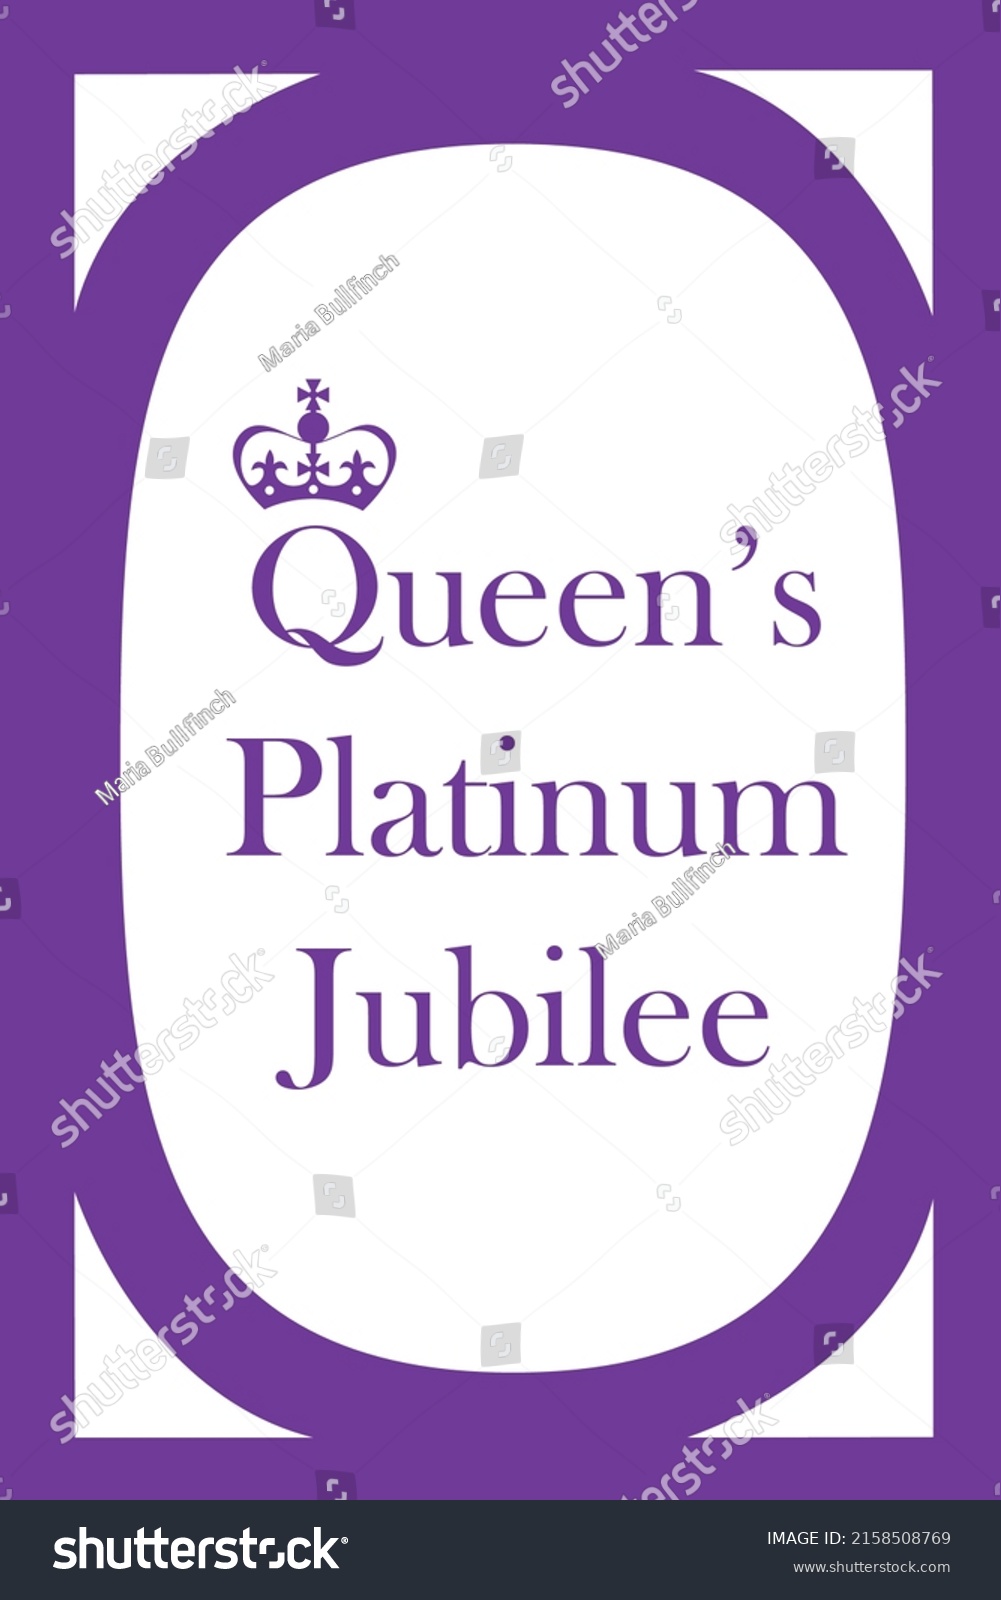 SVG of The Queen's Platinum Jubilee celebration. Queen's crown. 1952-2022. Design for banner, poster, card, print, social media. svg